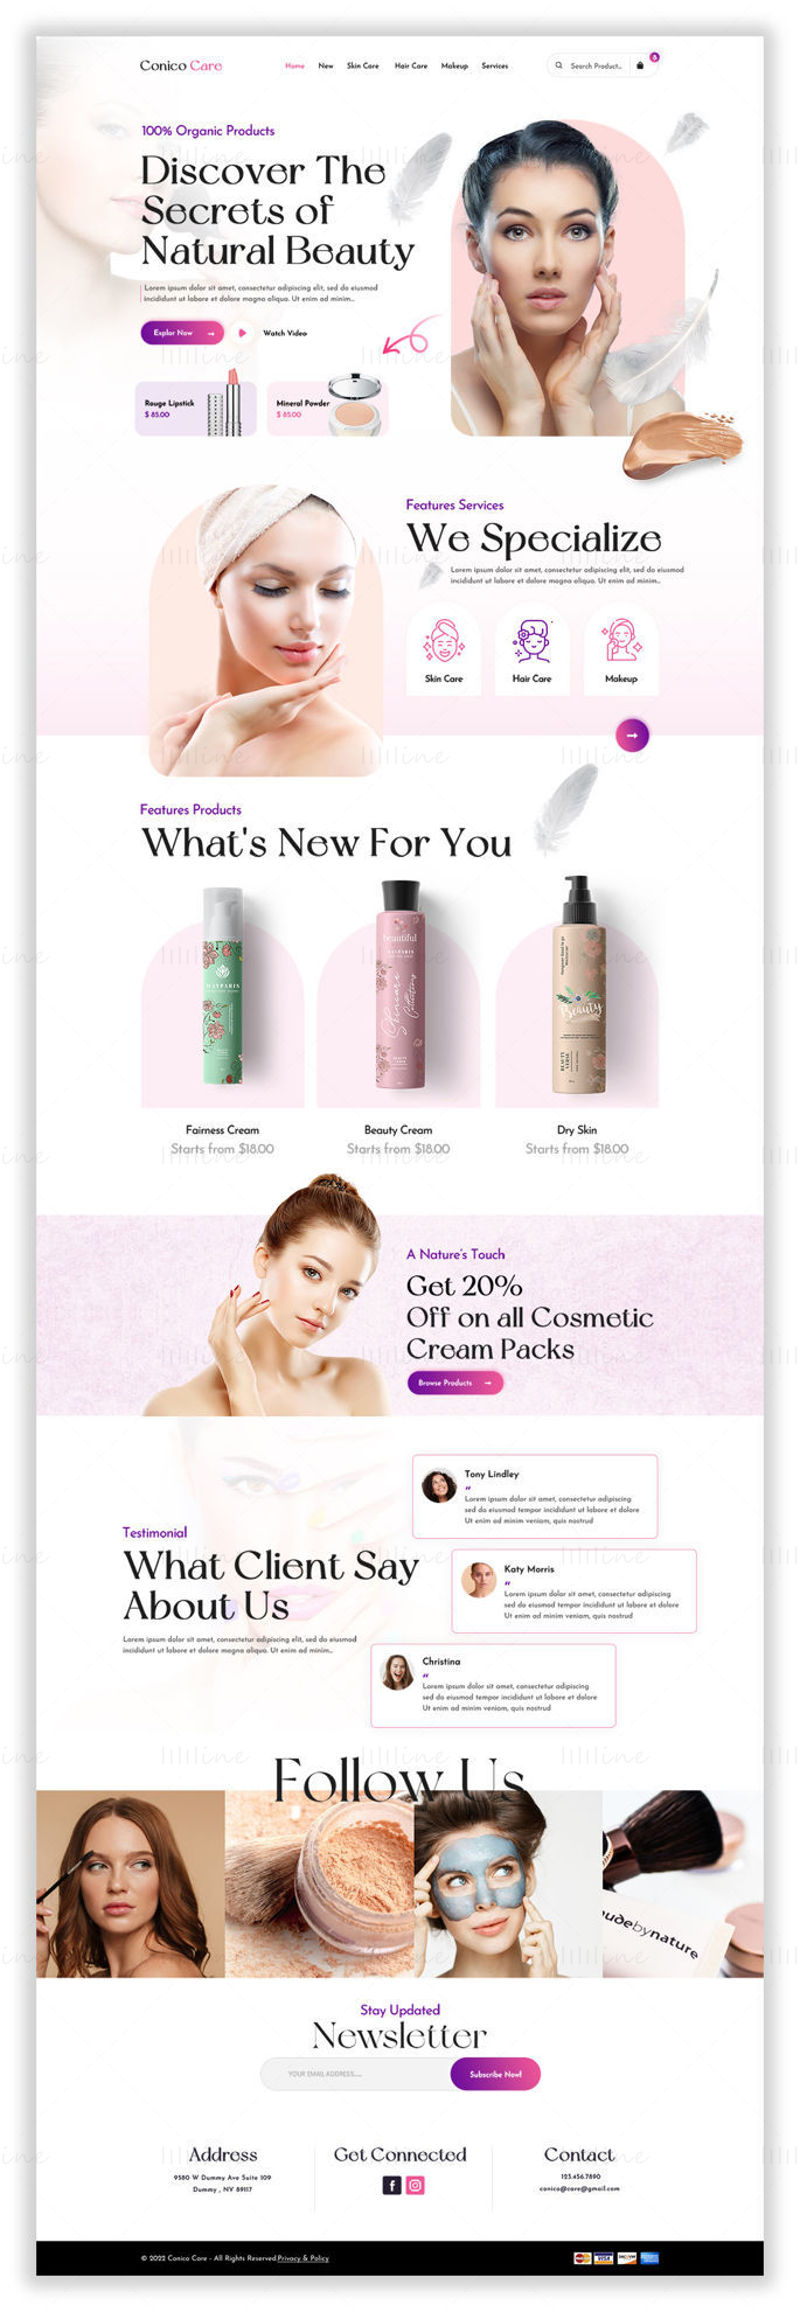 Conico-护理化妆品和皮肤护理主页设计模板 - UI Adobe Photoshop